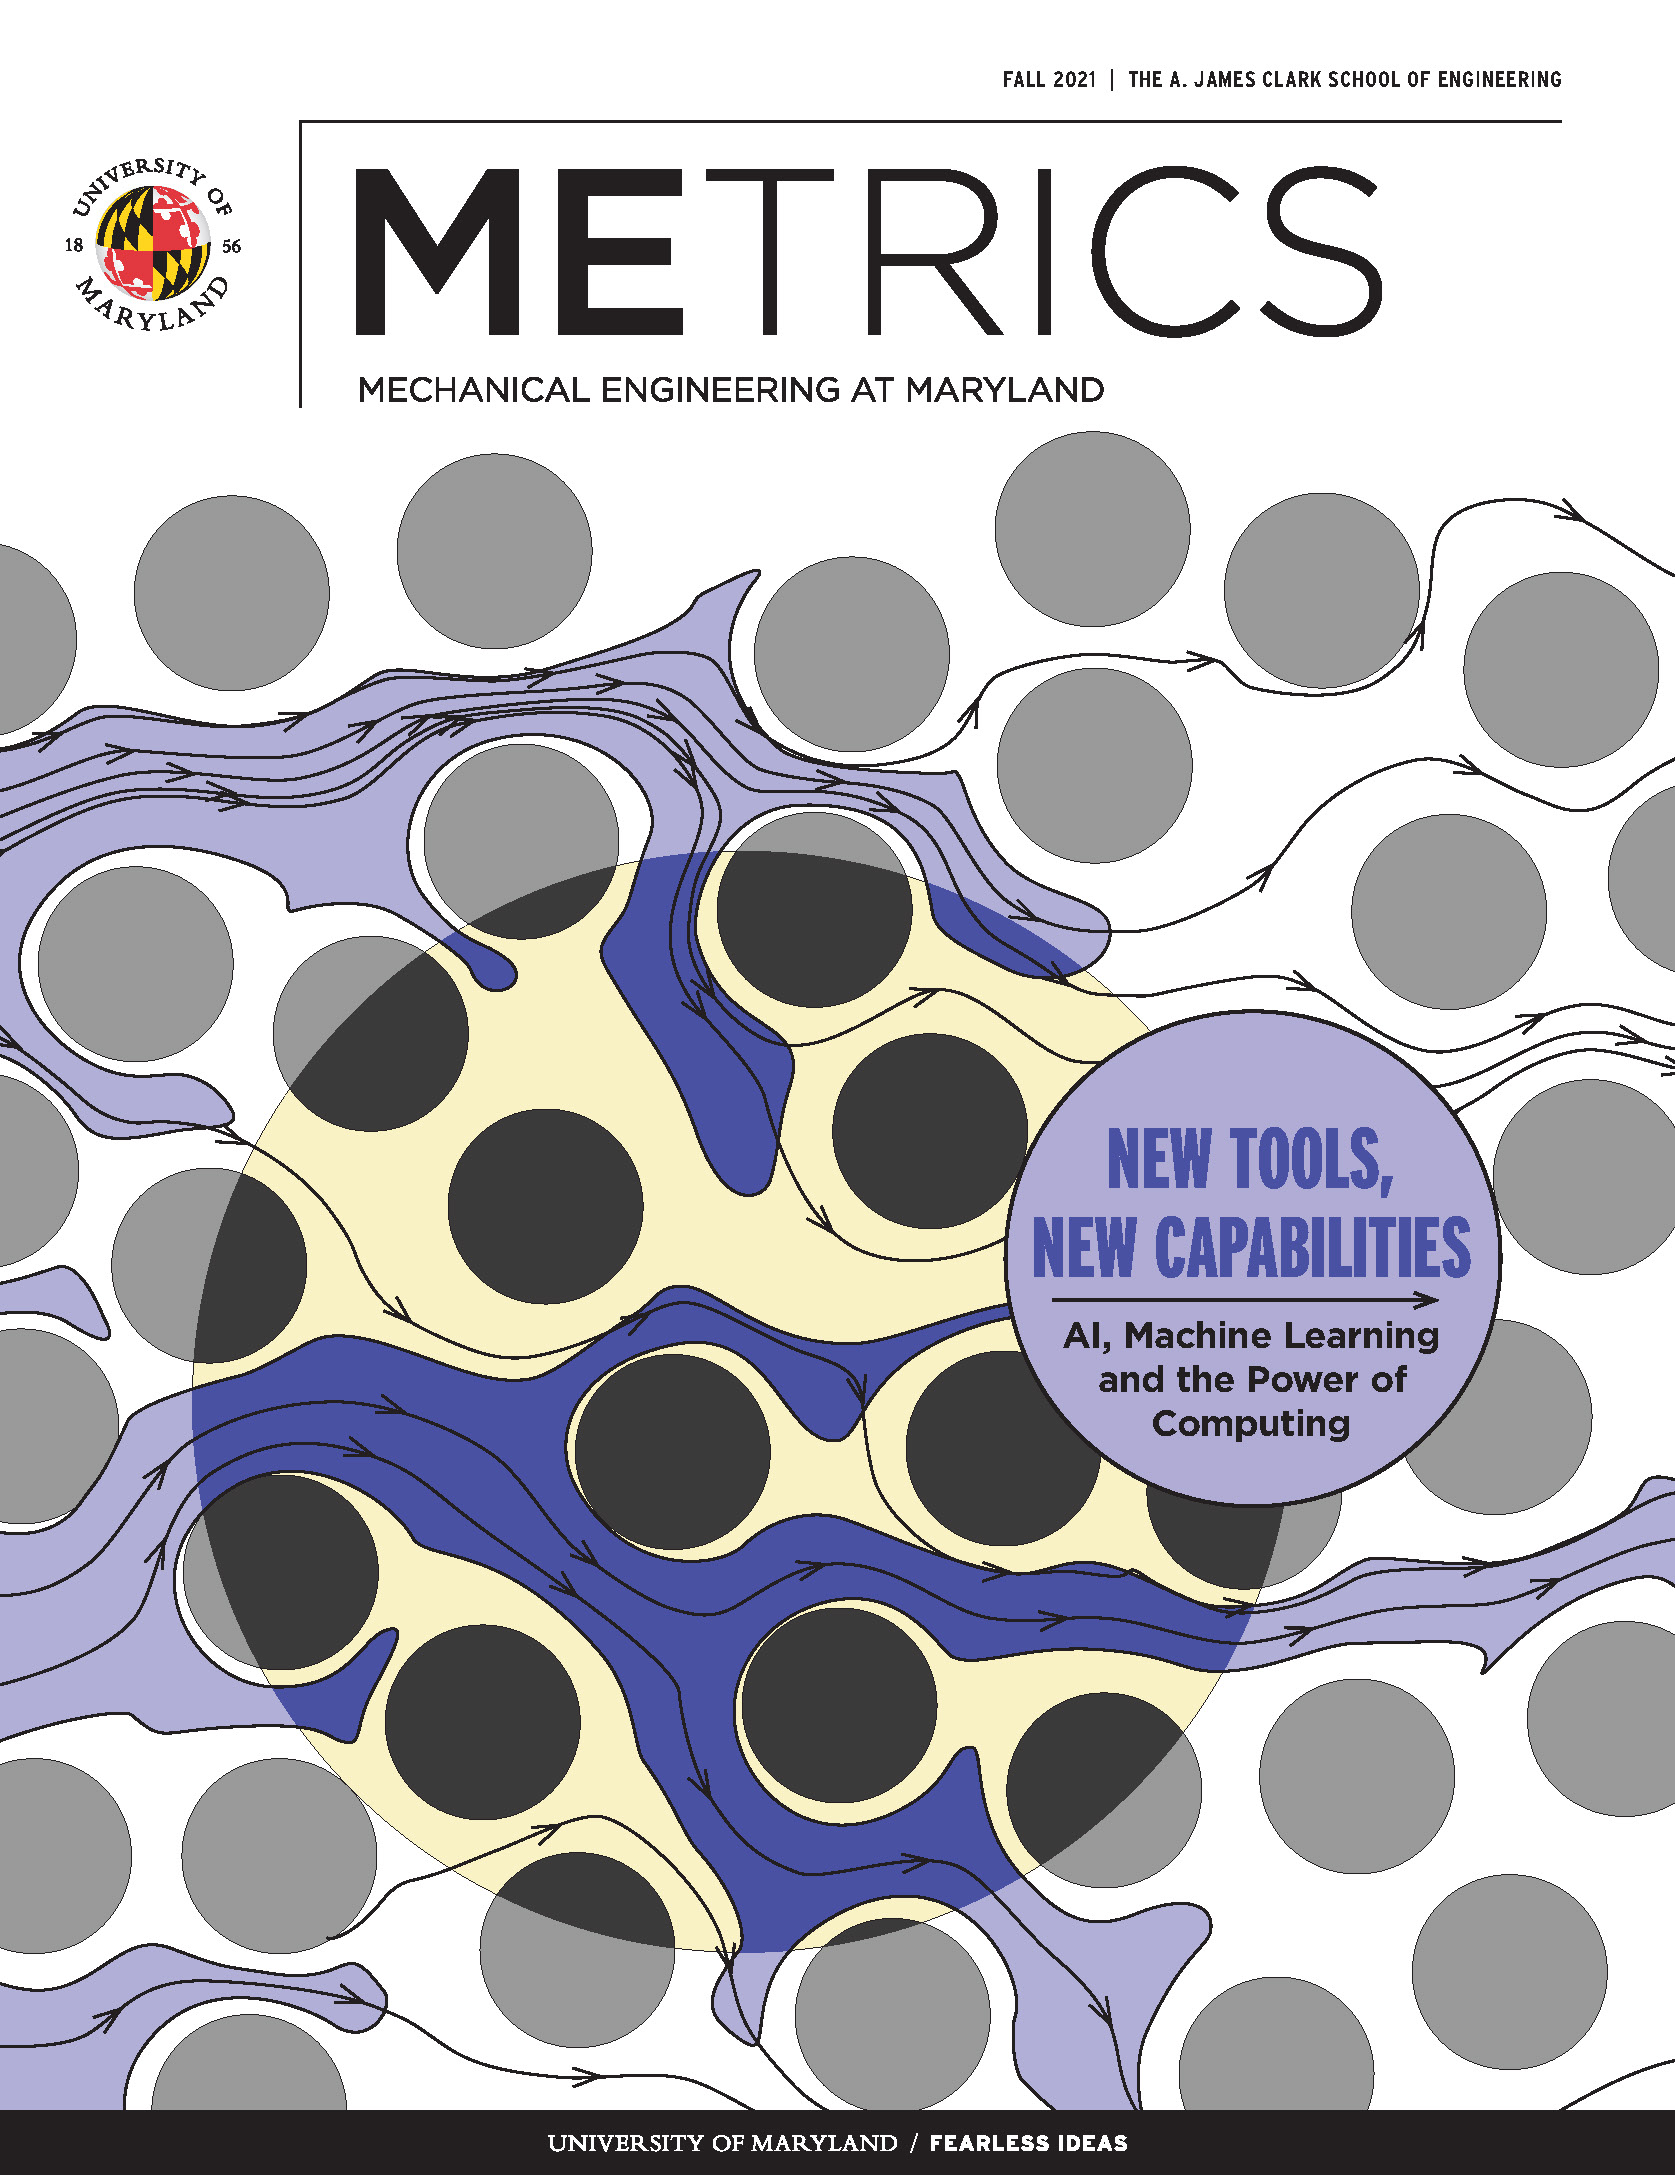 METRICS Magazine, Fall 2021